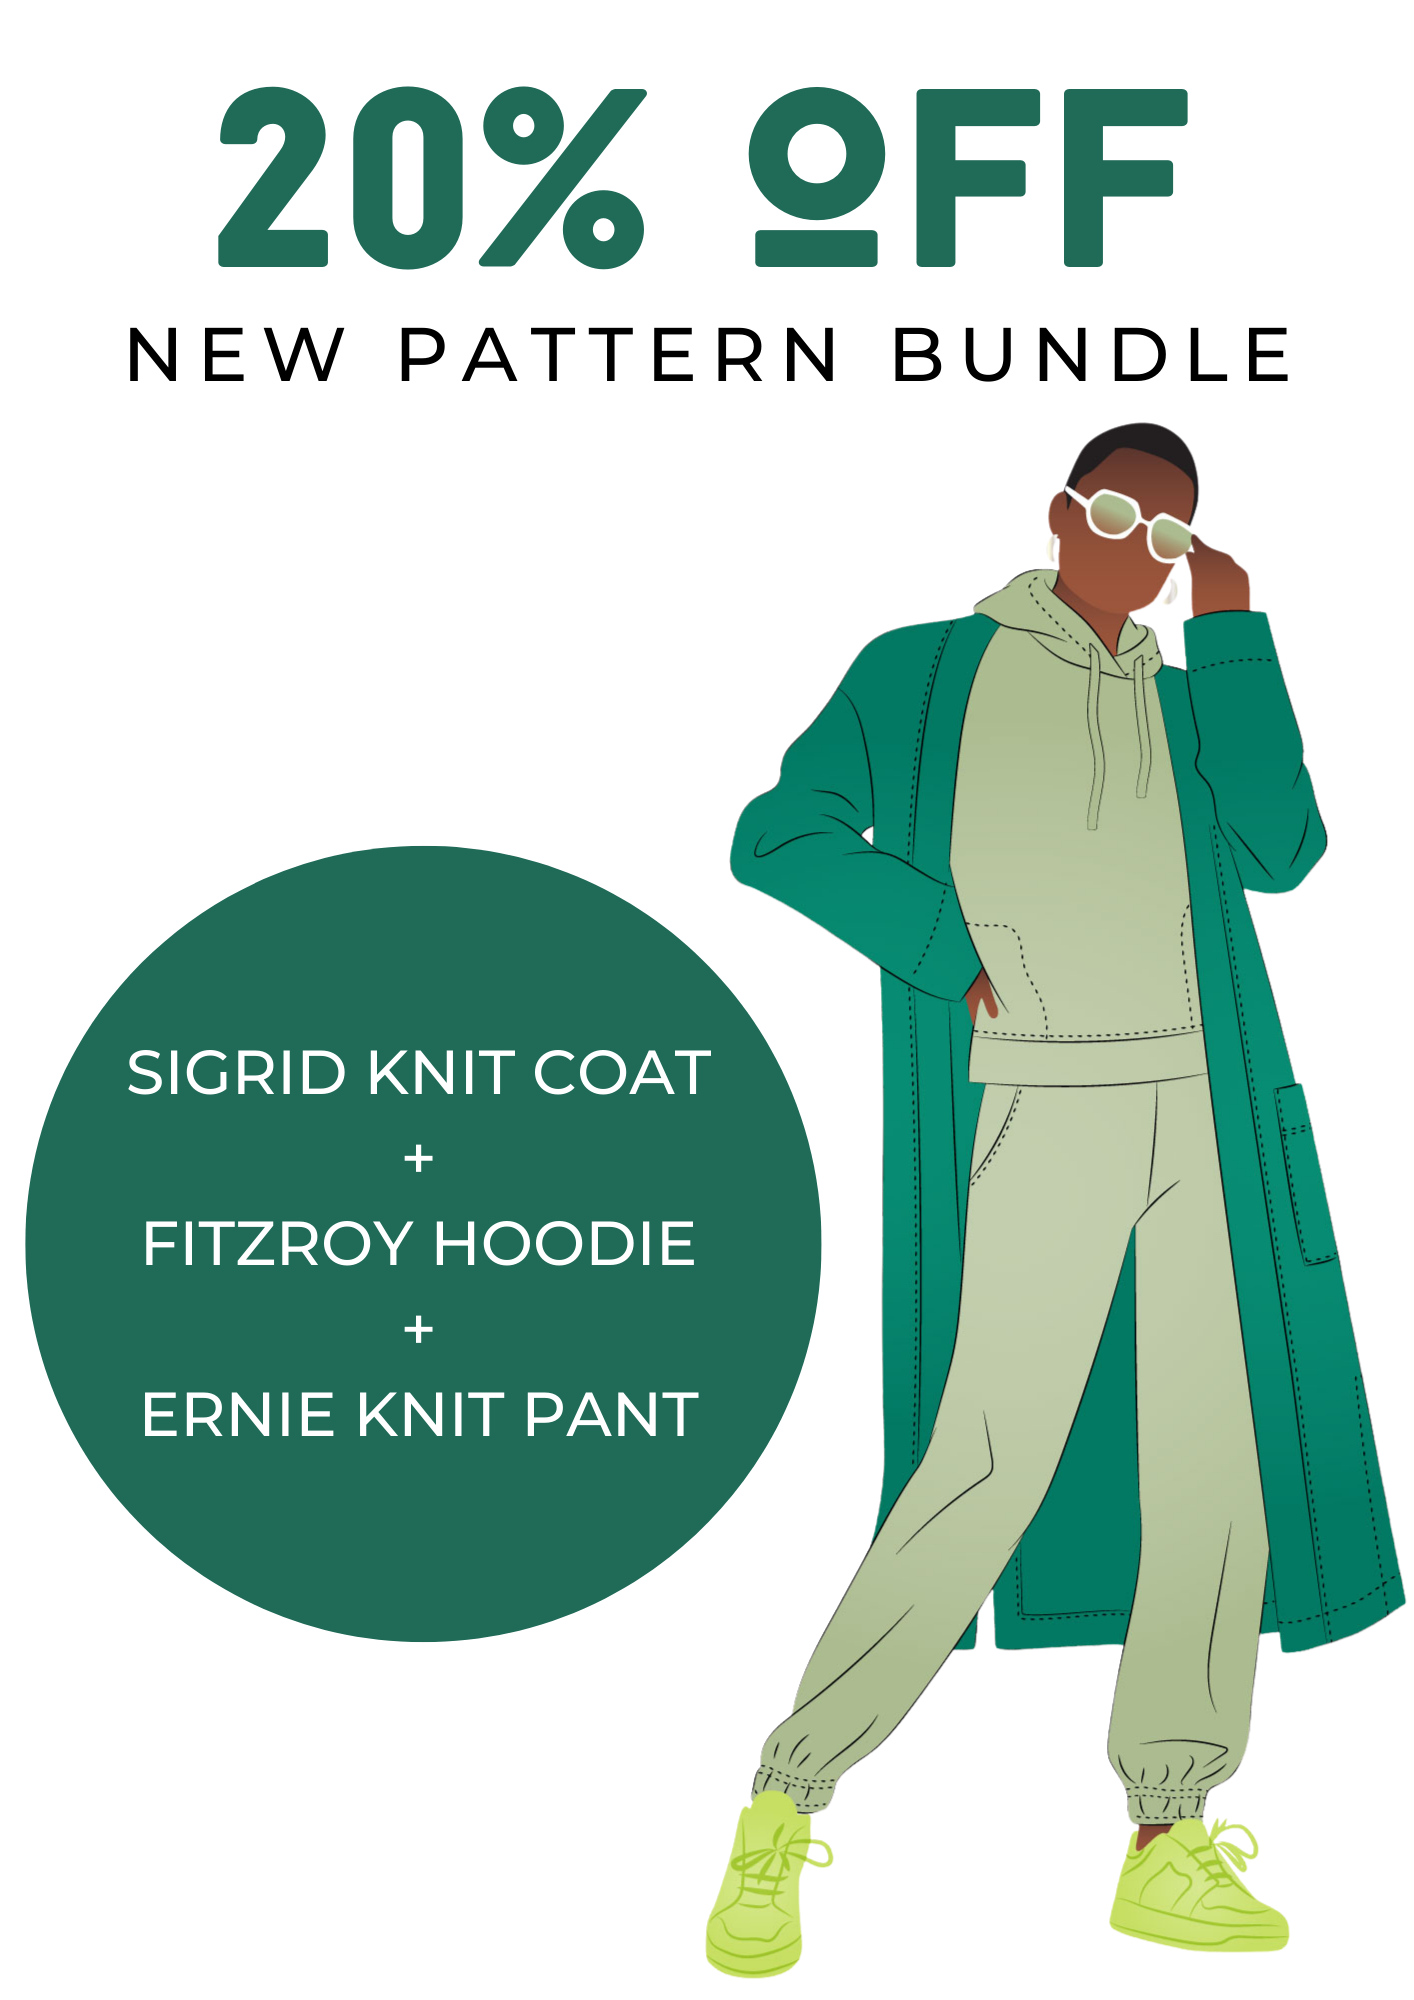 20% off new pattern bundle!